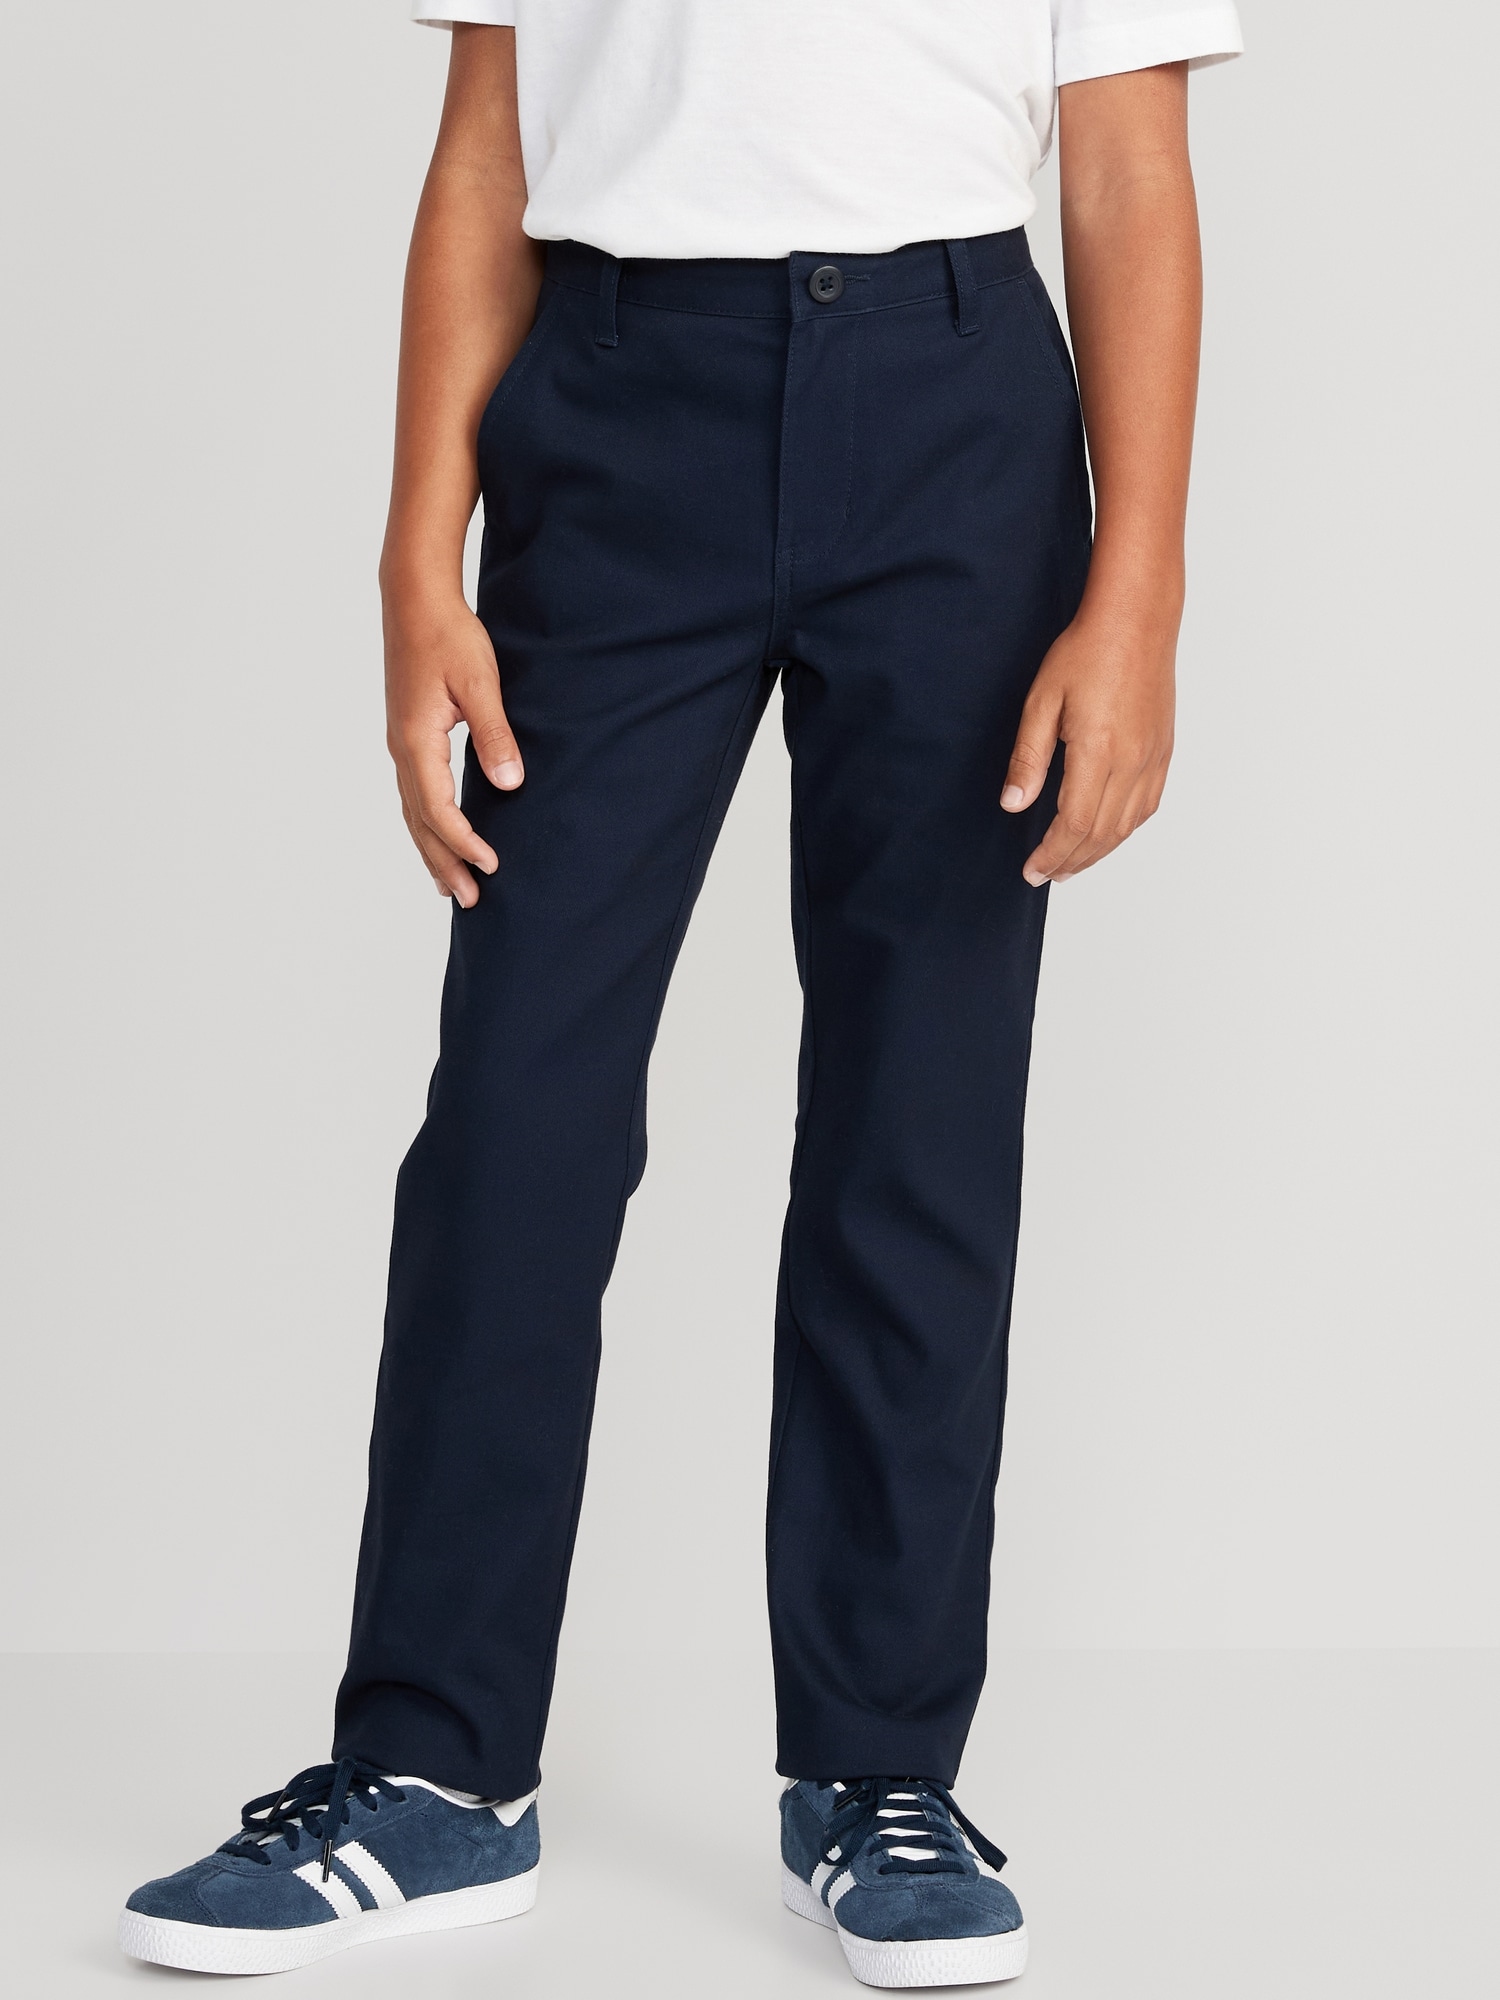 Slim BuiltIn Flex Chino School Uniform Pants for Boys  Old Navy